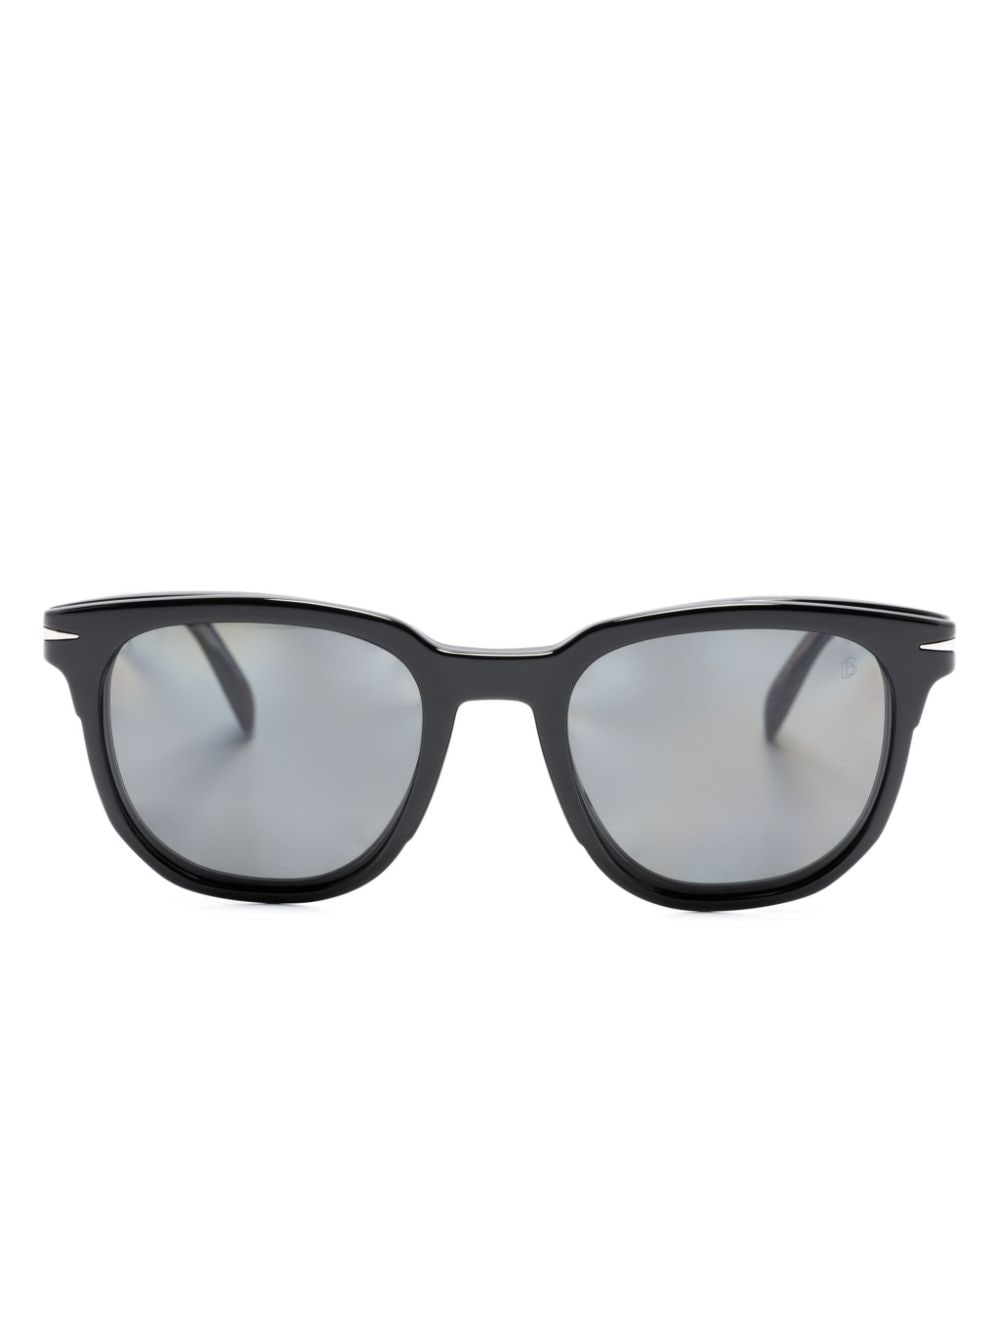 Eyewear By David Beckham Db 7120 Square-lenses Glasses In Brown